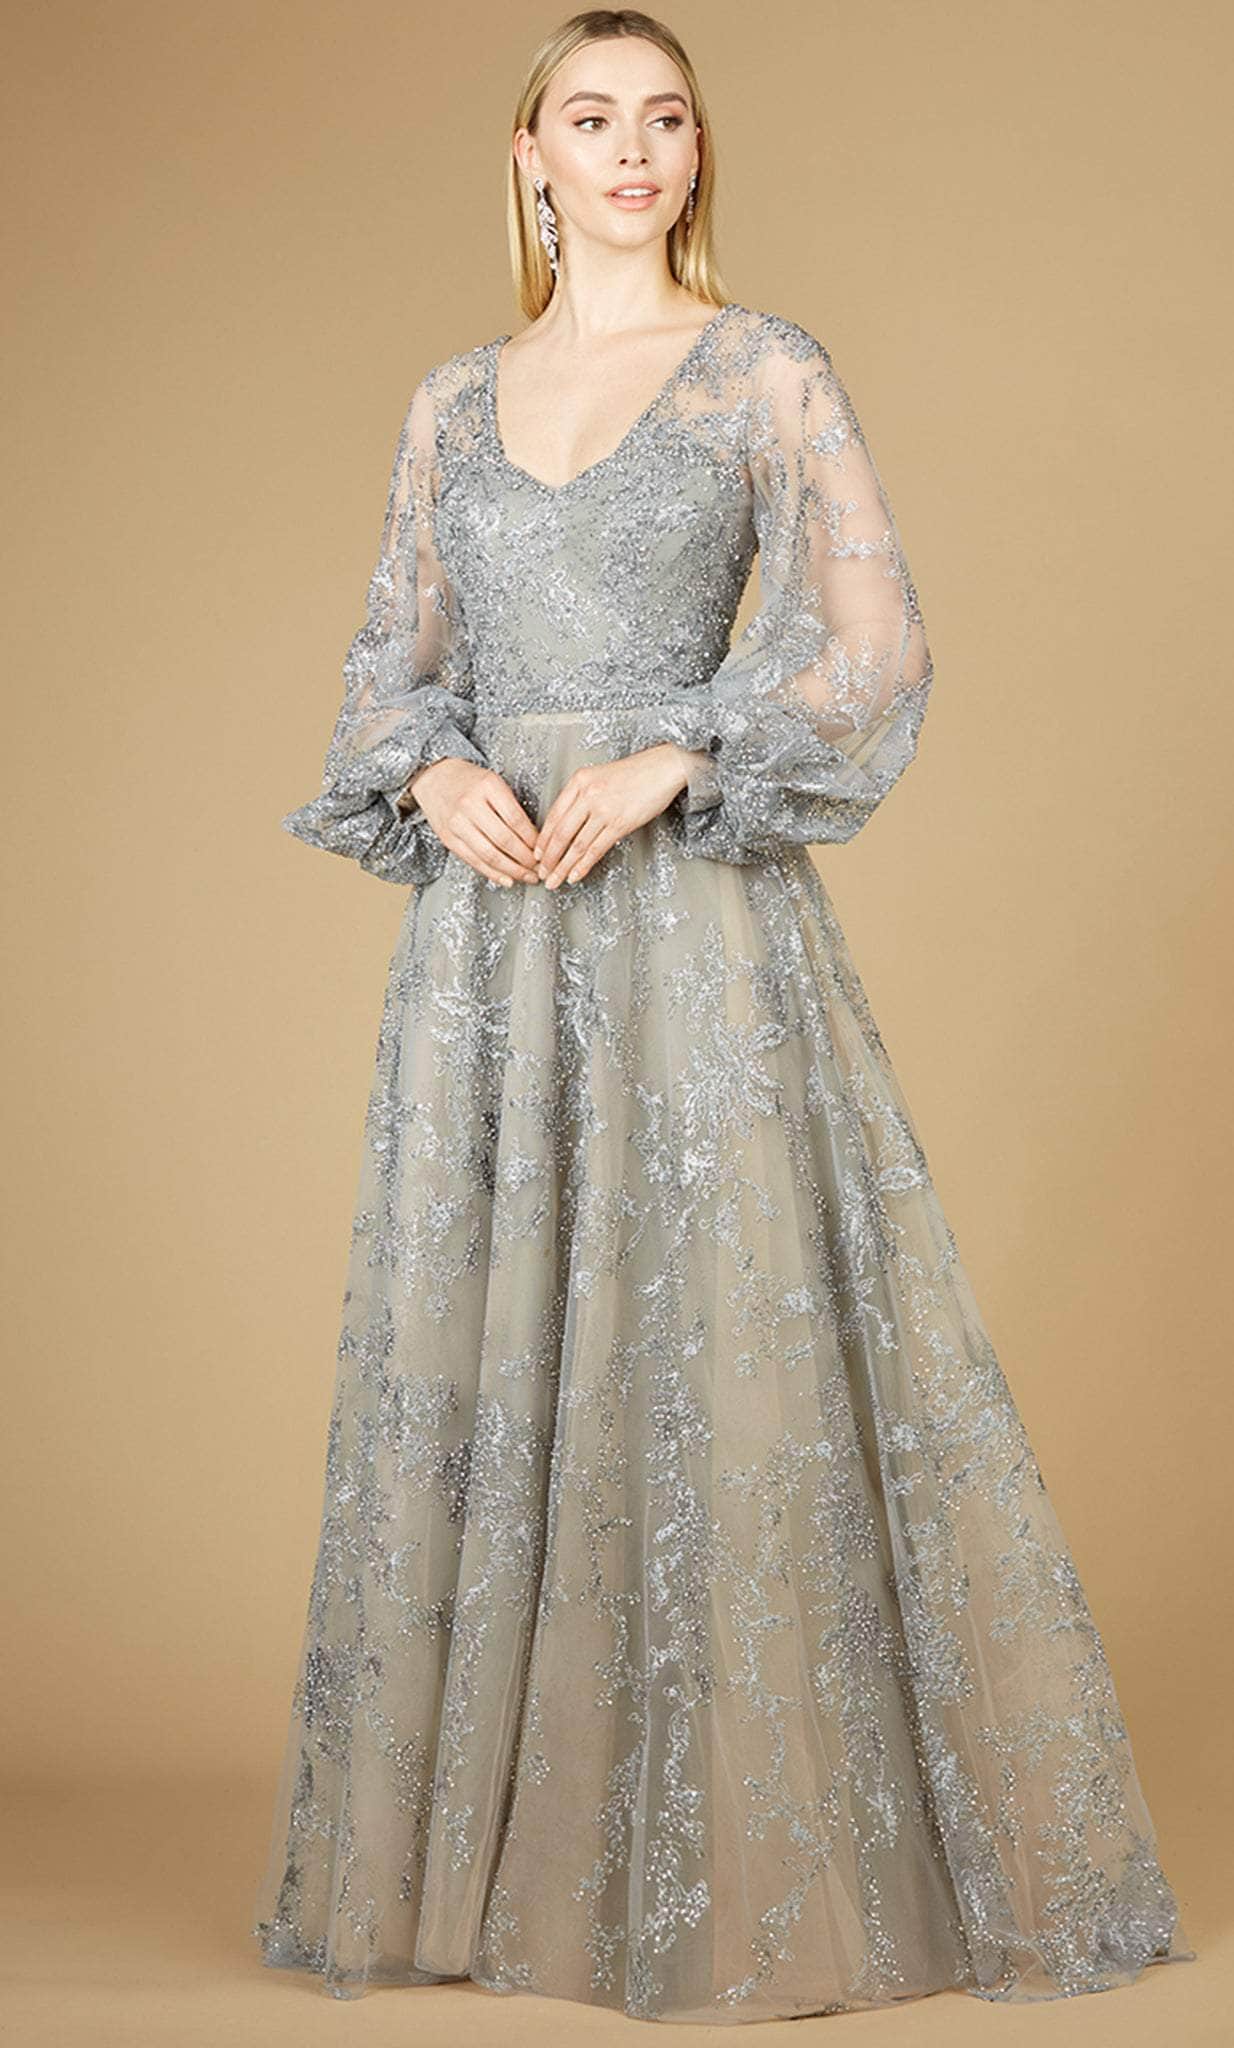 Image of Lara Dresses 29229 - Embellished Tulle Semi-Ballgown